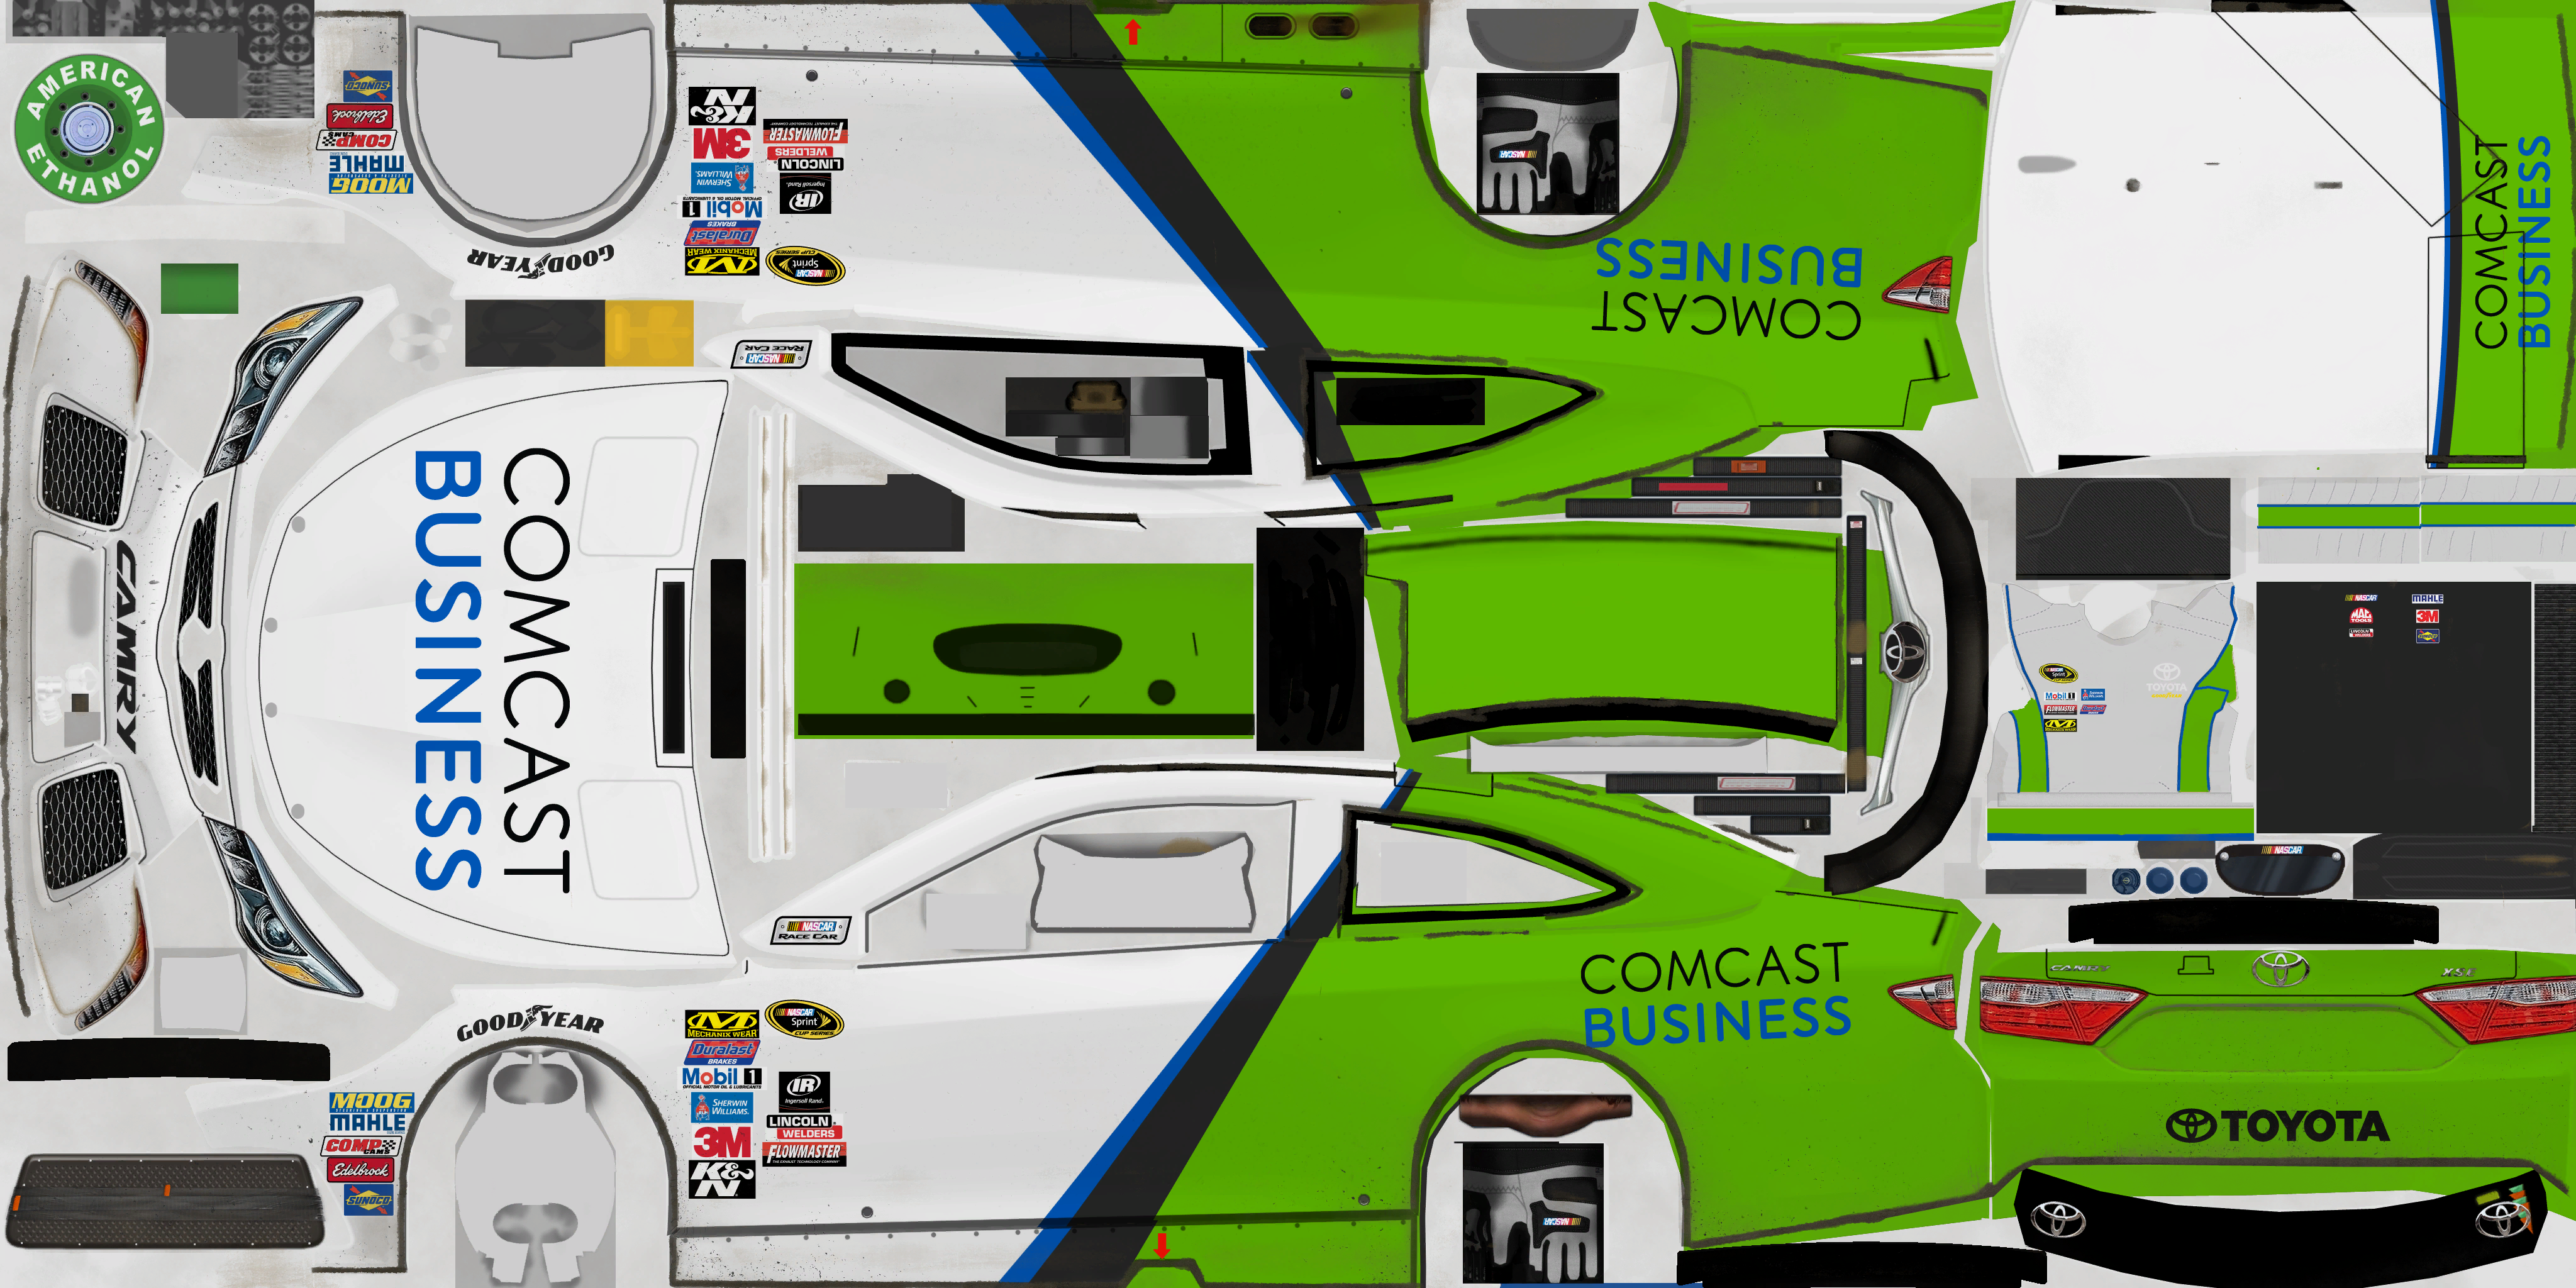 NASCAR Heat Evolution - Contract 4: Comcast Business Toyota